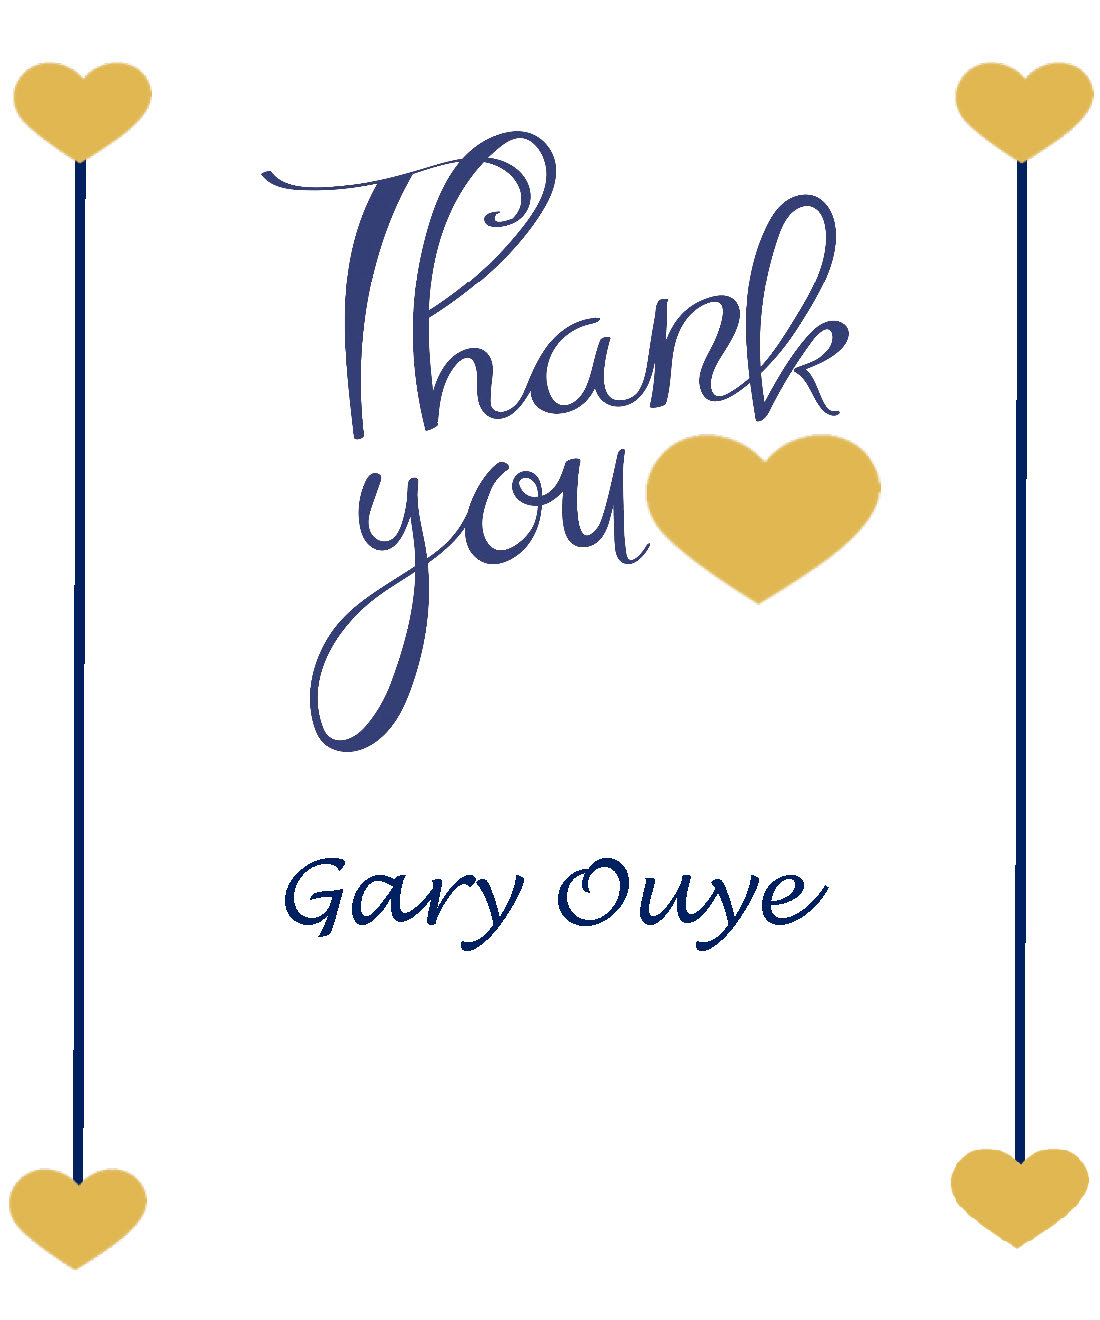 Gary Ouye